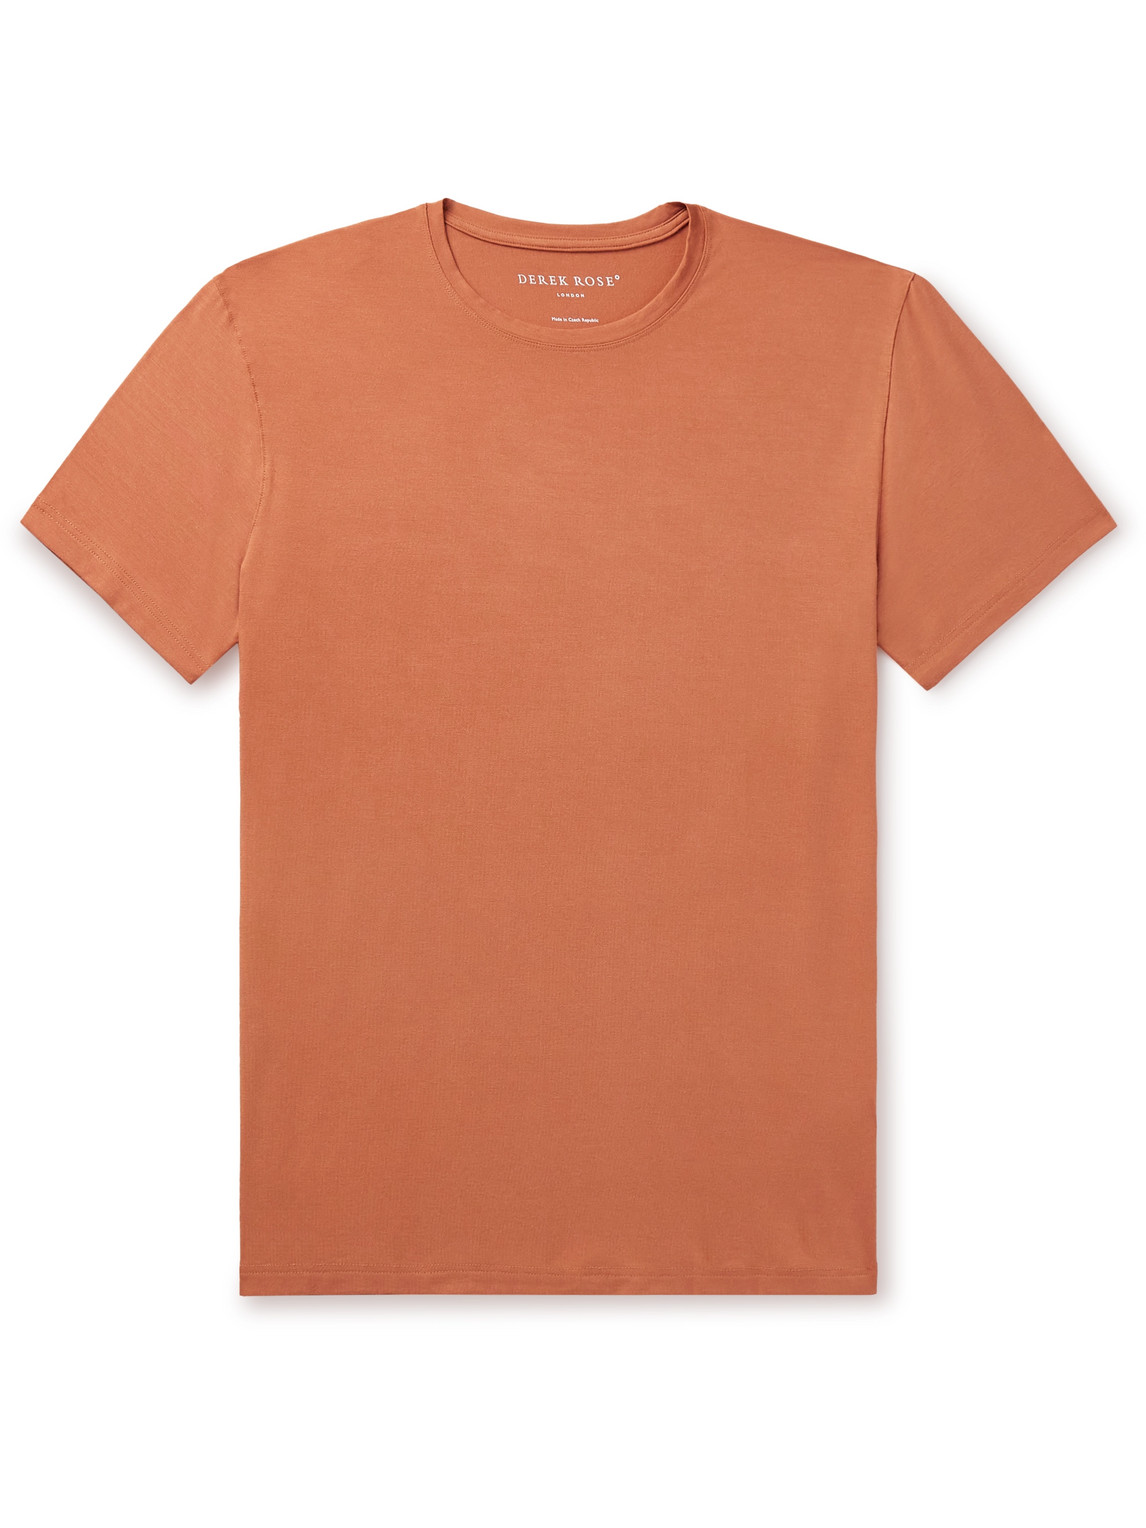 Basel 16 Stretch-Modal Jersey T-Shirt